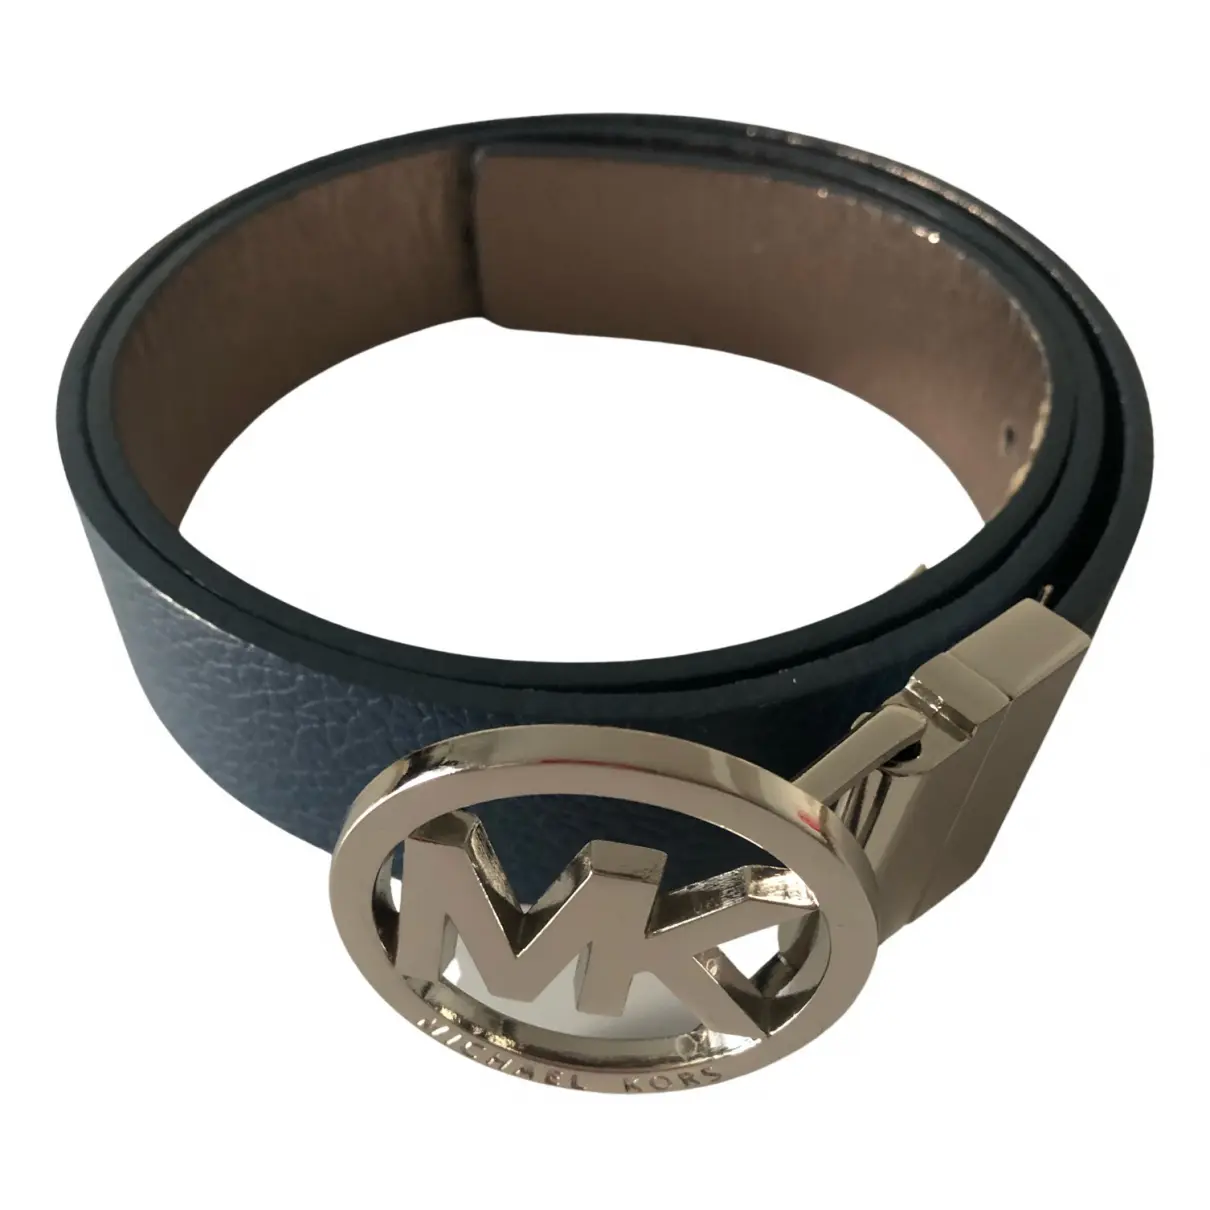 Leather belt Michael Kors